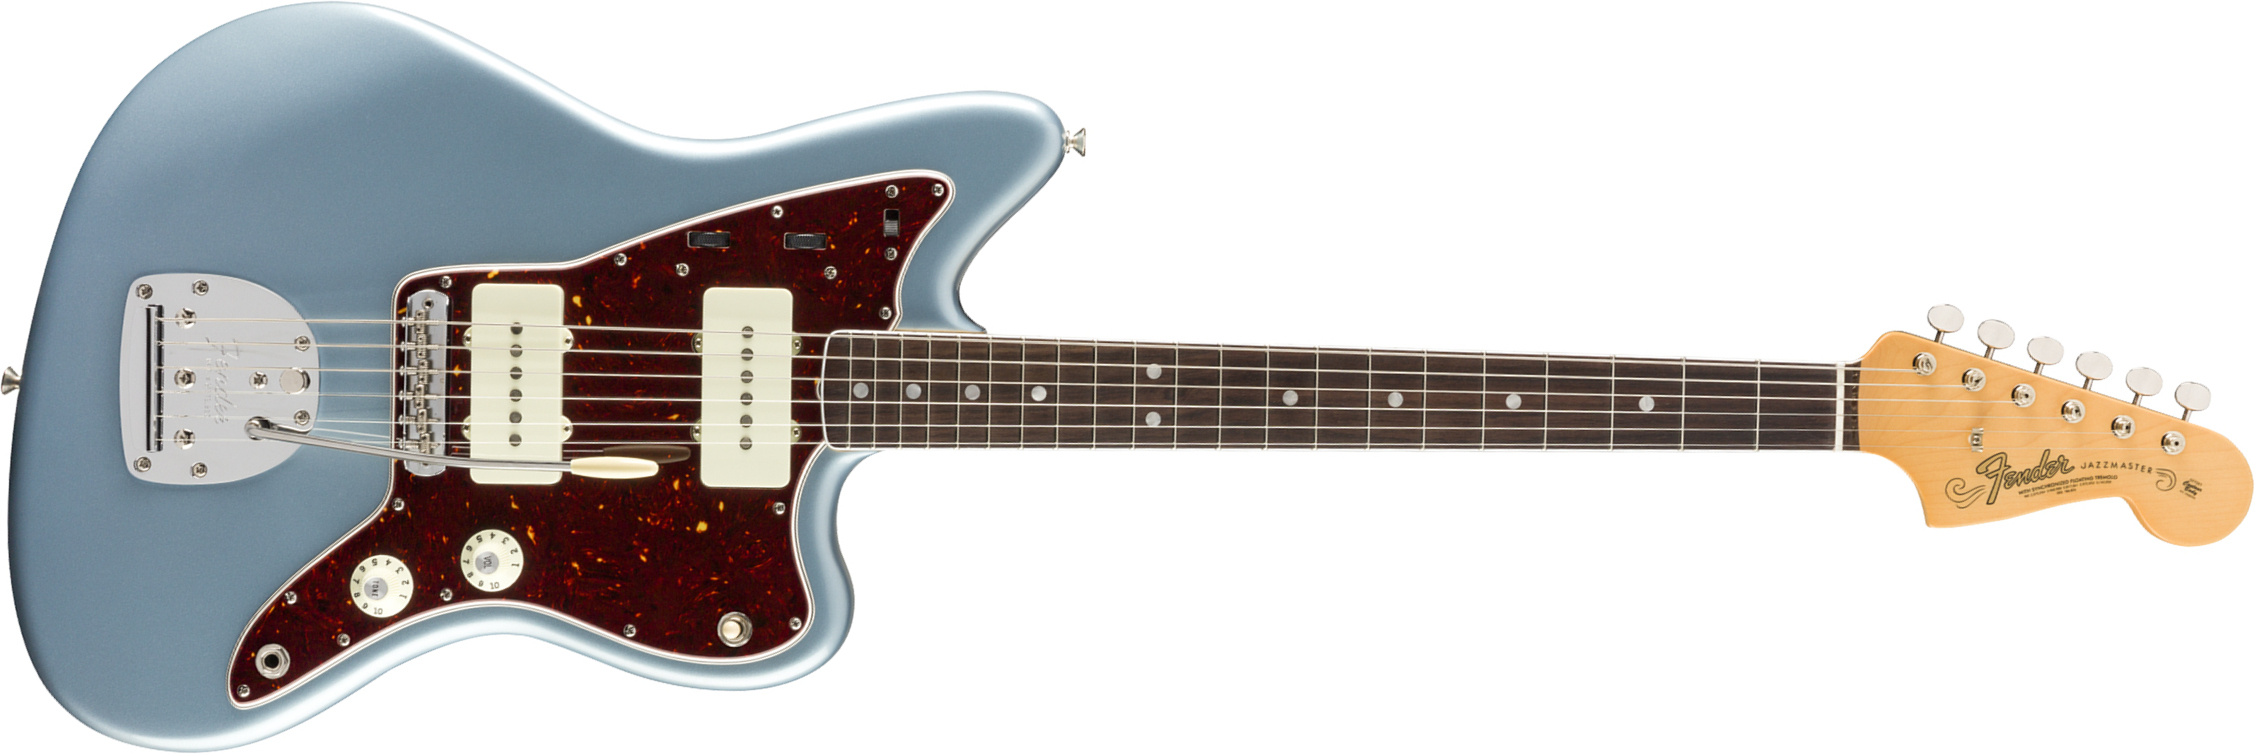 Fender Jazzmaster '60s American Original Usa Ss Rw - Ice Blue Metallic - Retro rock electric guitar - Main picture